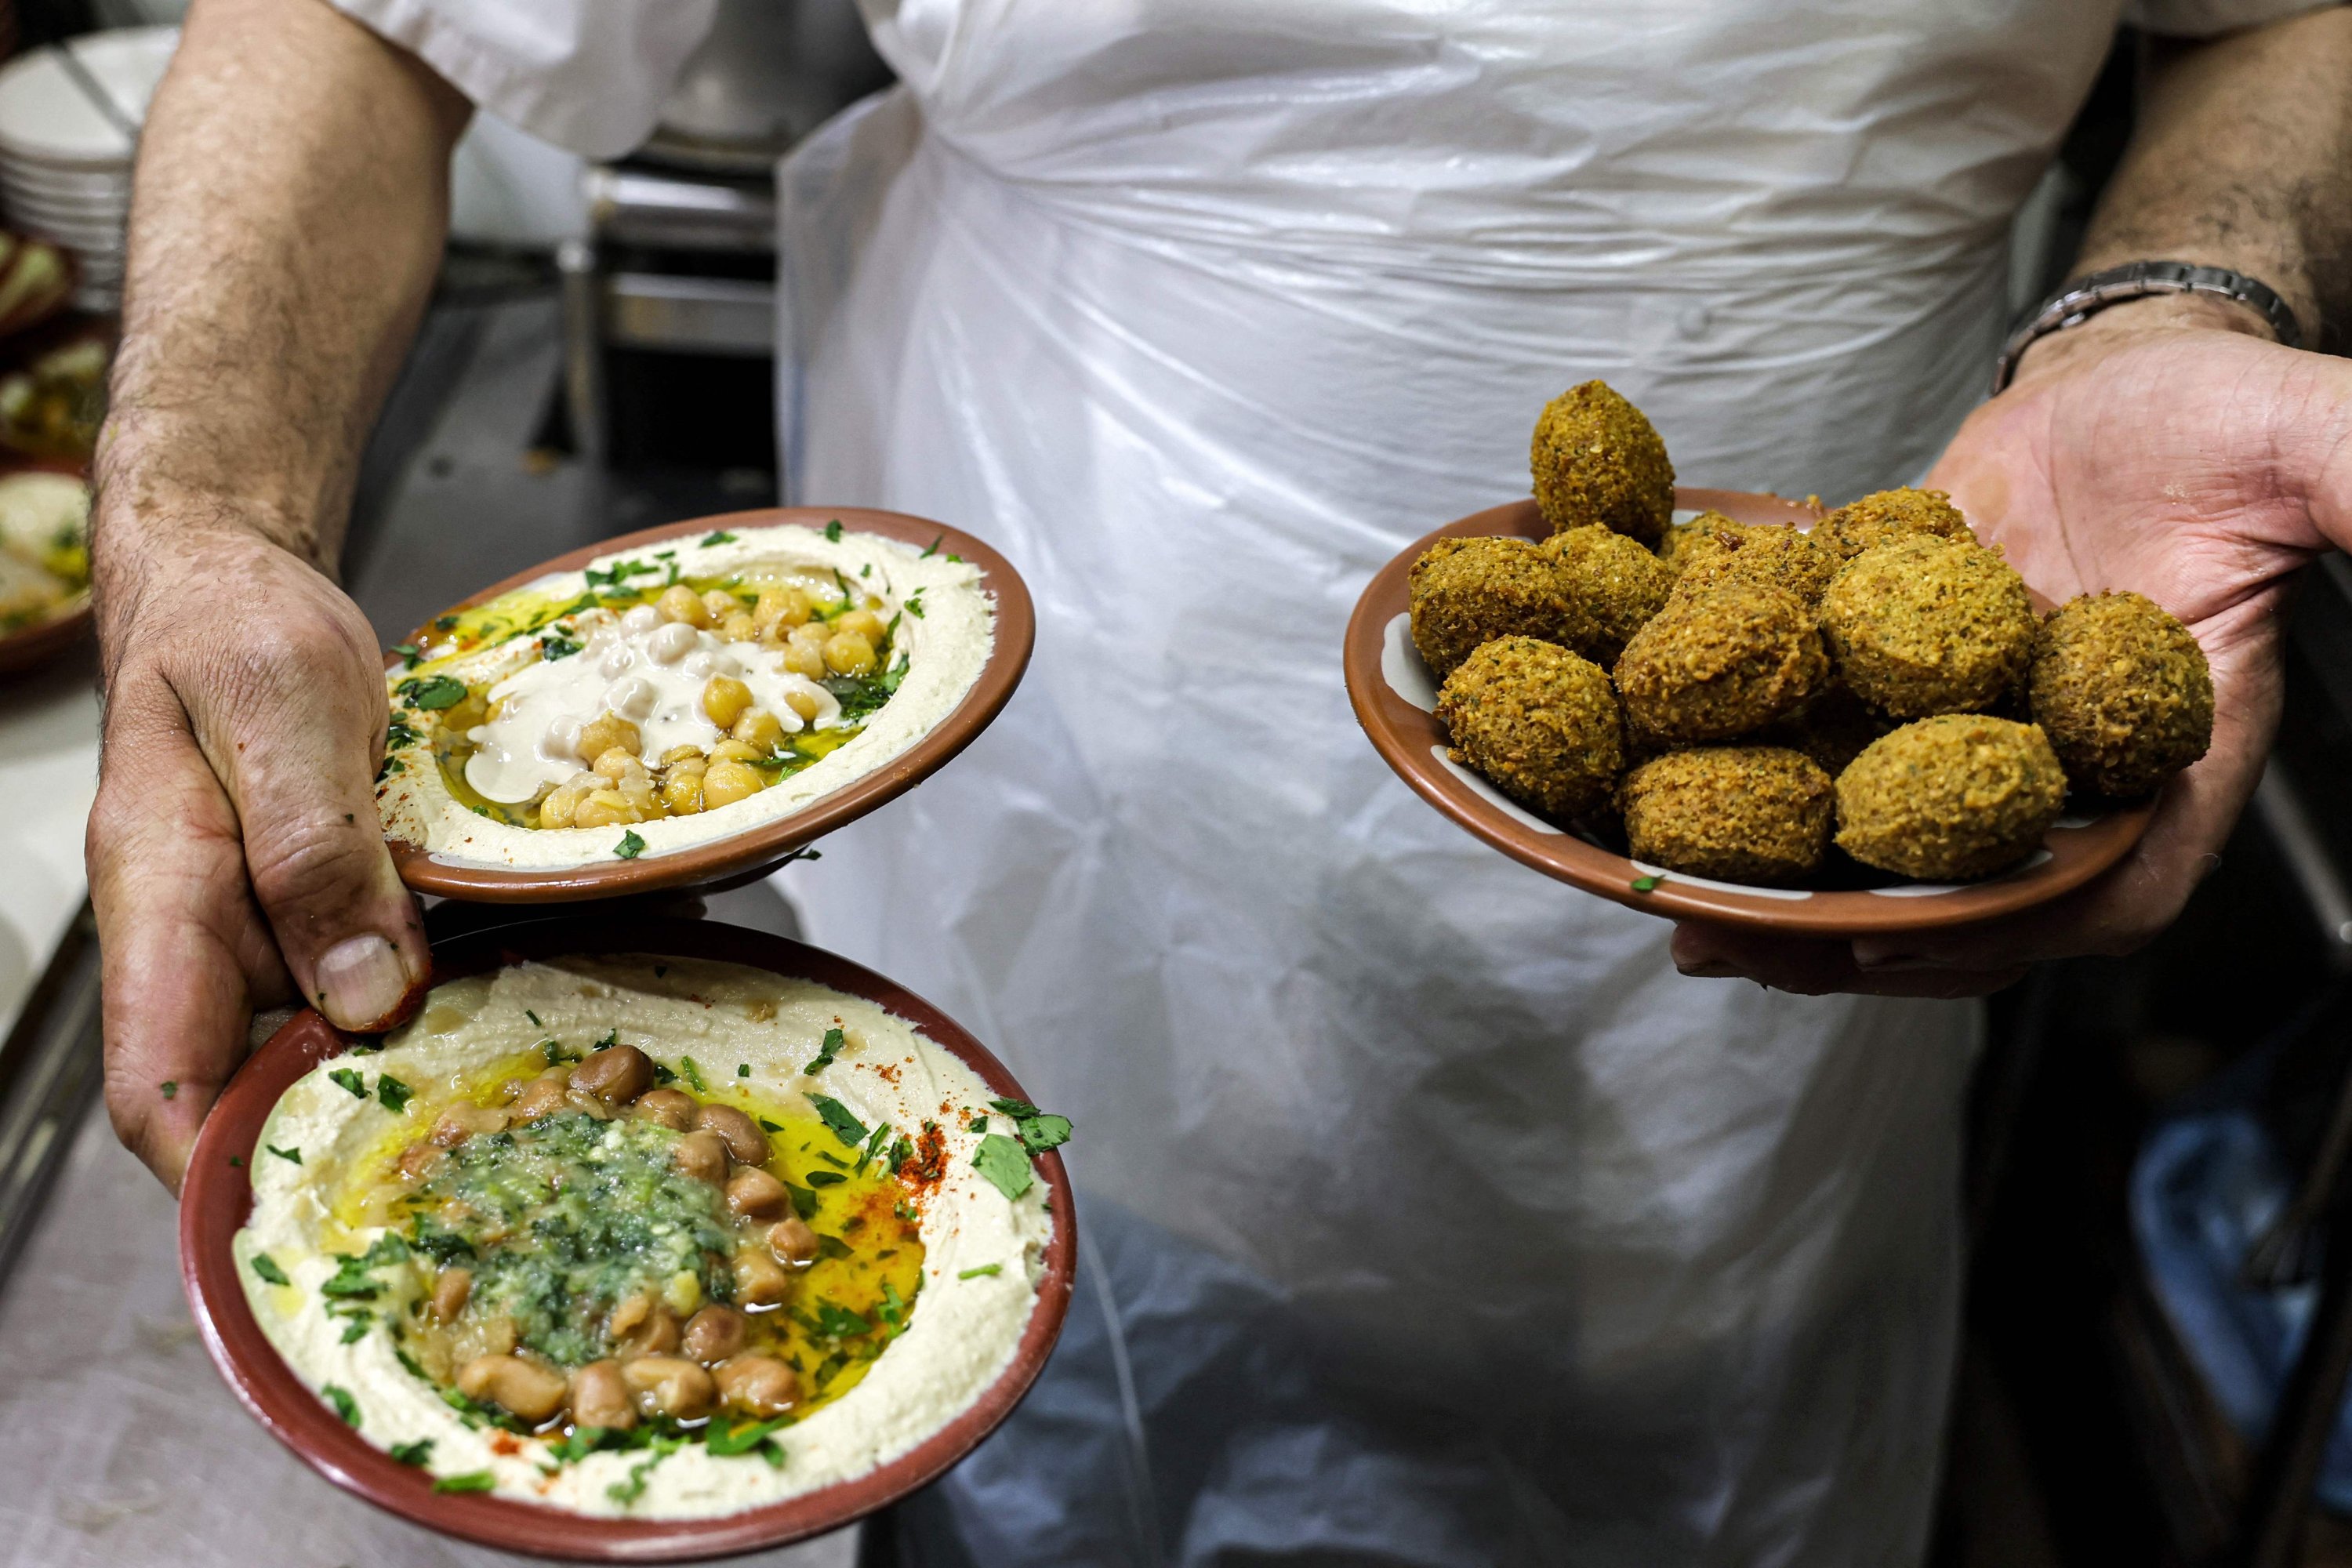 Seorang juru masak bersiap untuk menyajikan sepiring hummus, kacang fava, dan falafel untuk disajikan kepada klien di sebuah restoran di Kota Tua Yerusalem, Palestina yang diduduki, 26 Juli 2022. (AFP Photo)